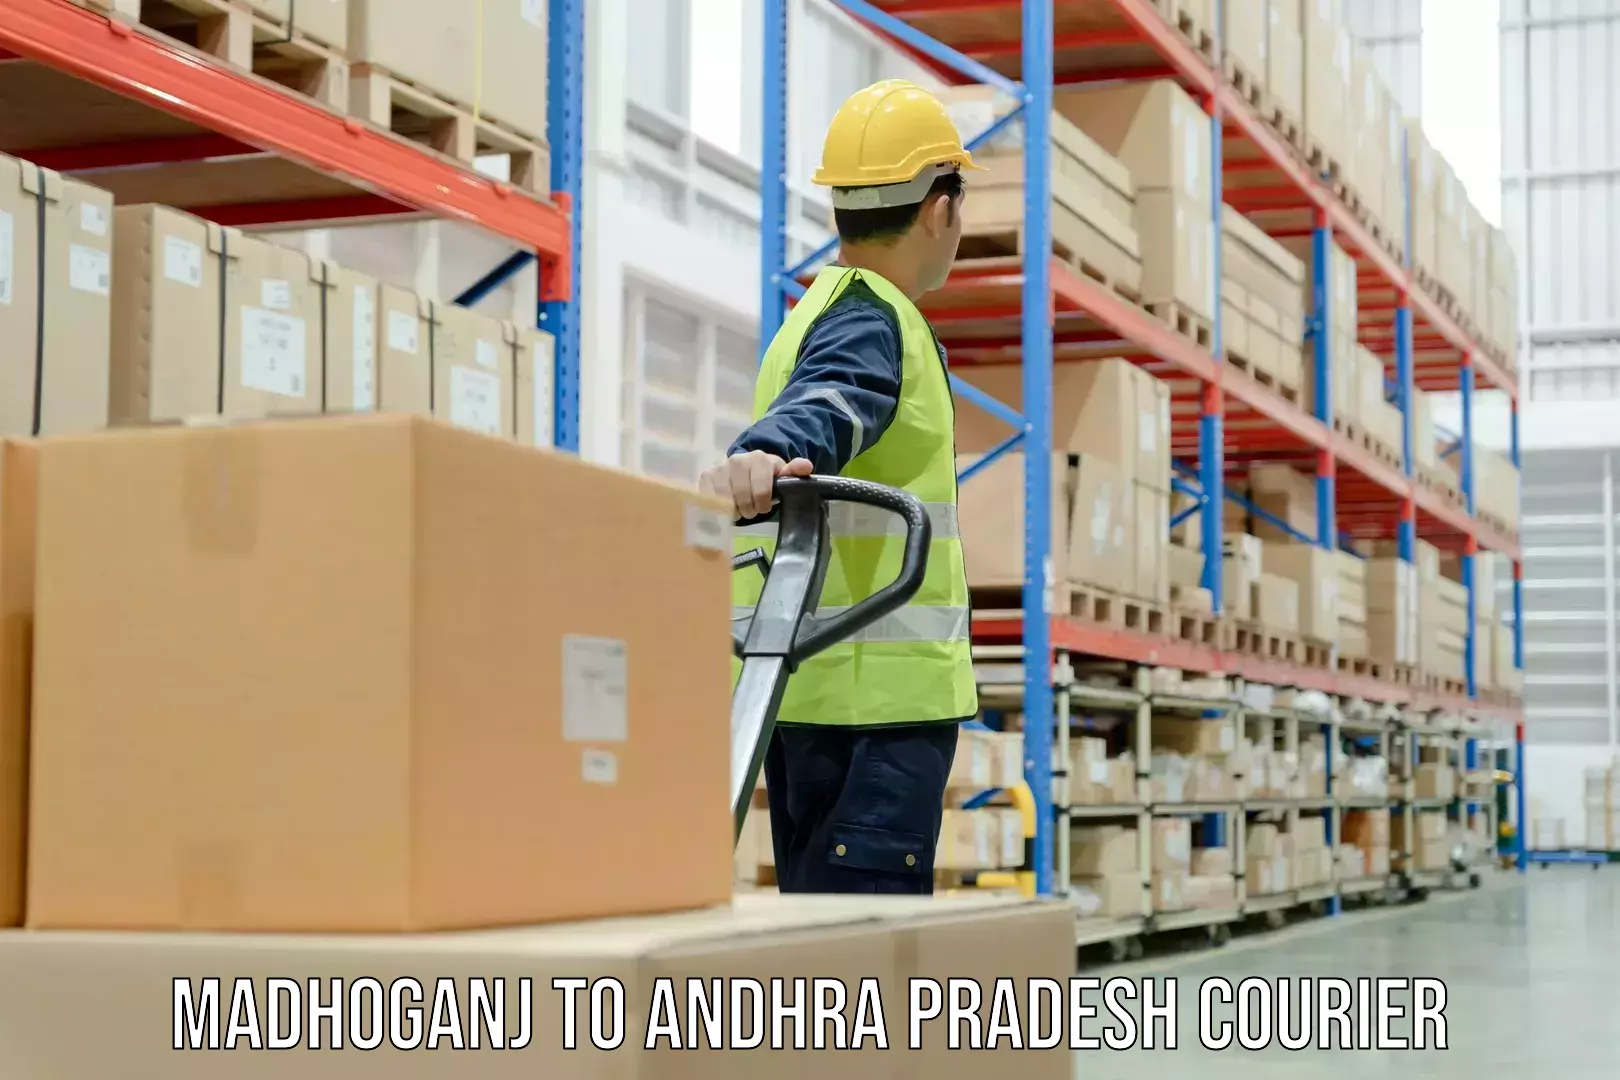 Courier service comparison Madhoganj to Andhra Pradesh